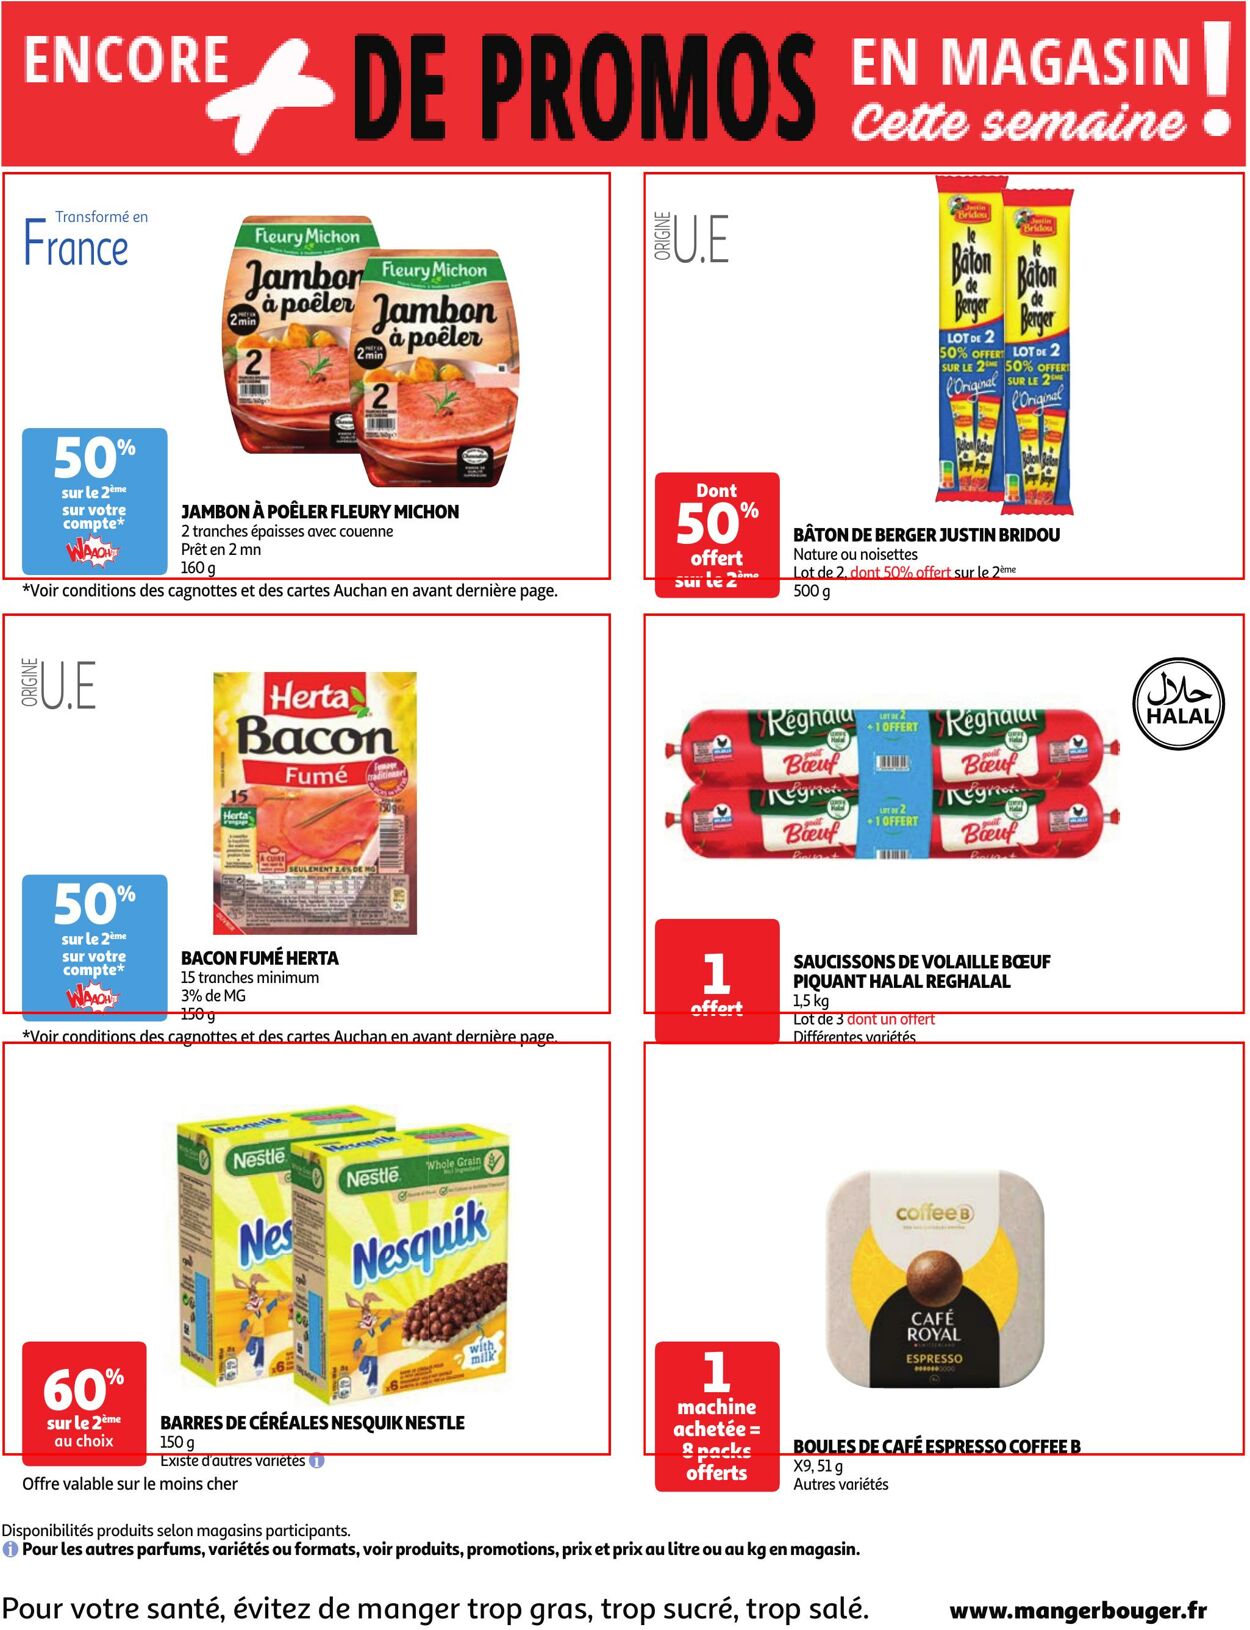 Catalogue Auchan 31.05.2023 - 05.06.2023